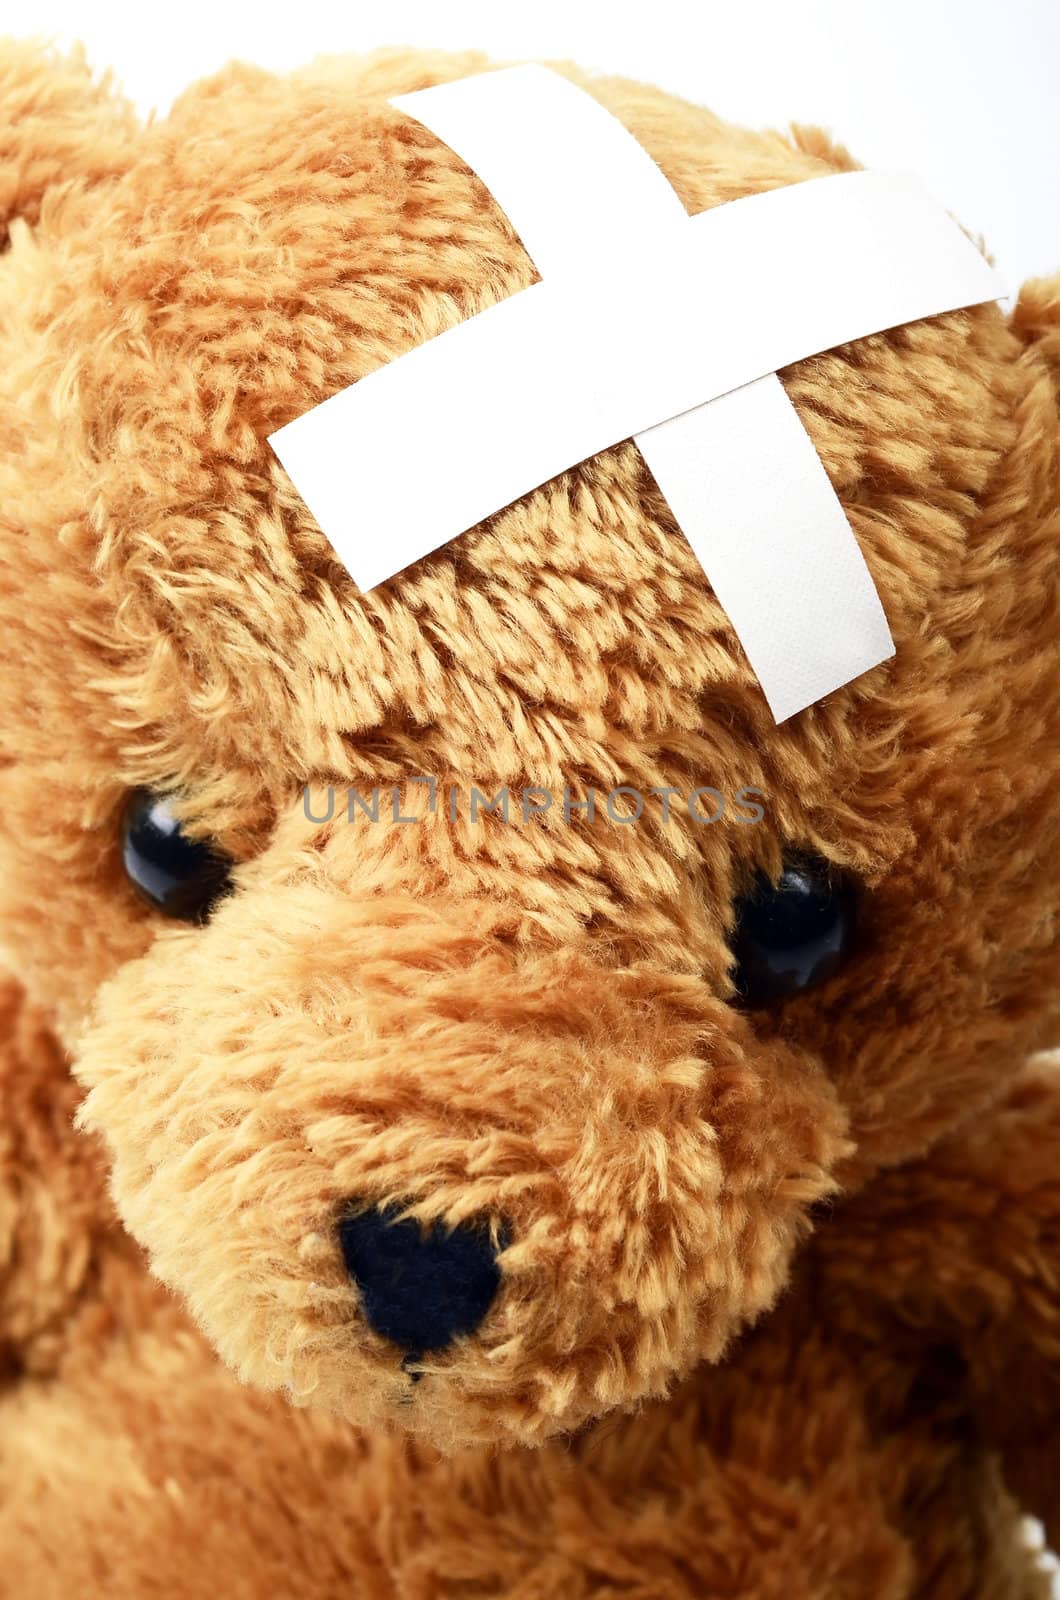 Teddy bear with a bandage